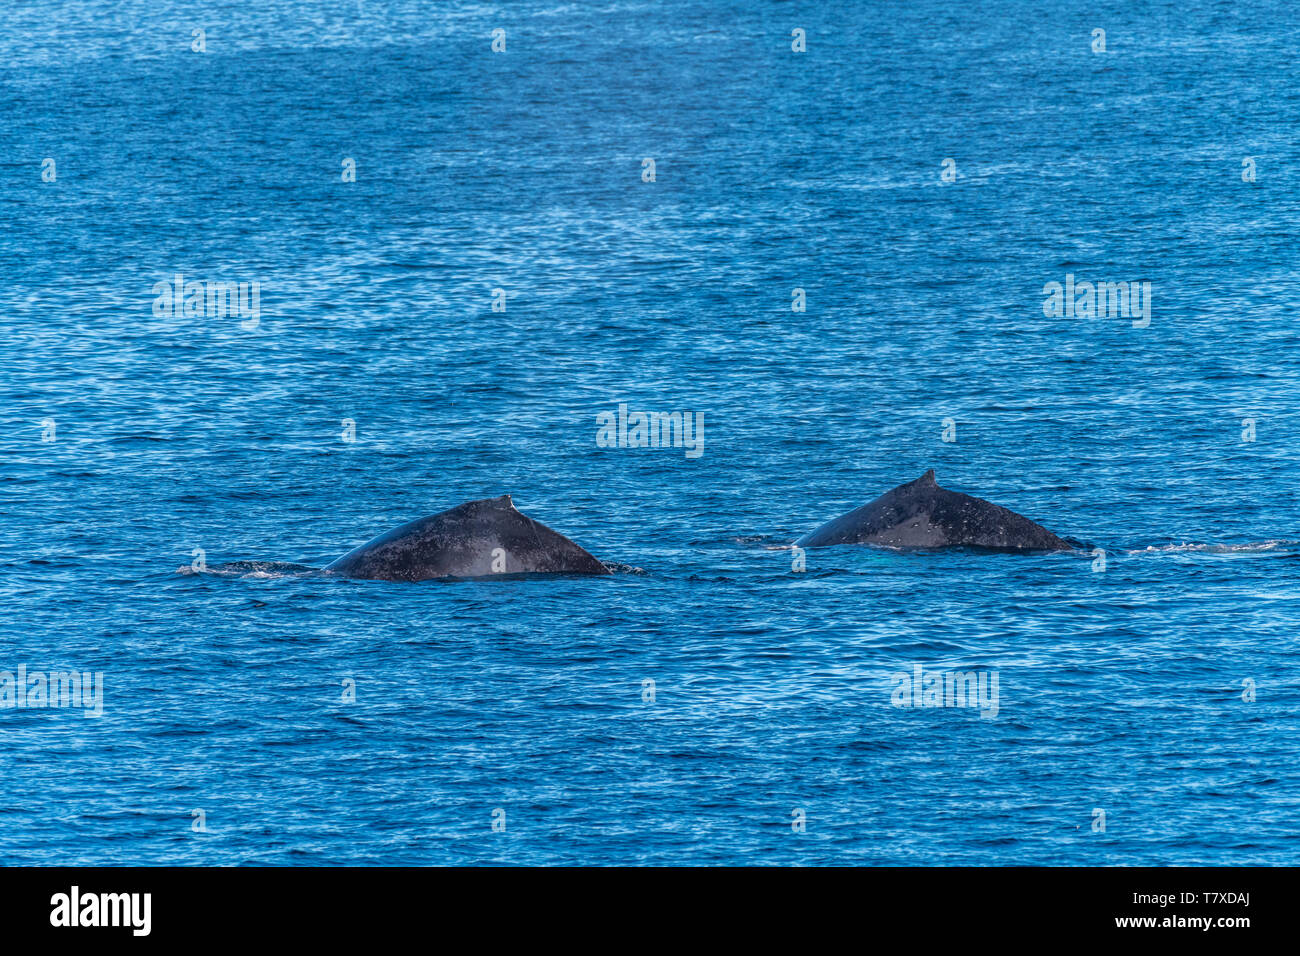 Two Humpback Whales (Megaptera novaeangliae) surfacing off the coast of Baja California, Mexico. Stock Photo